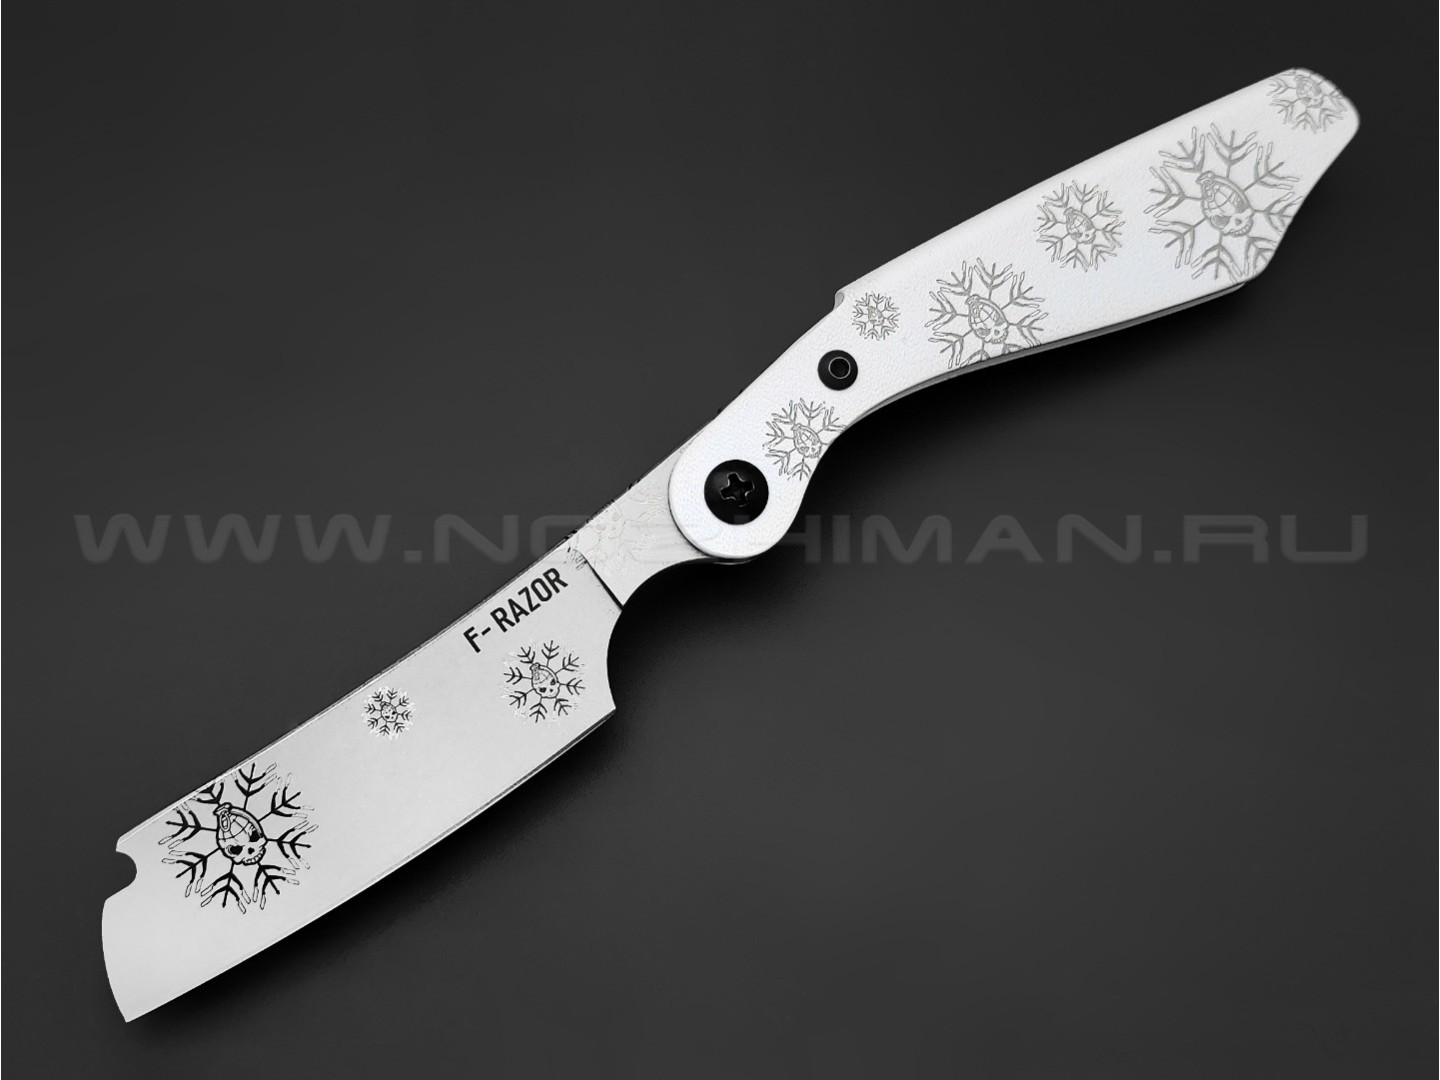 Brutalica нож-бритва F-Razor Snow, сталь X50CrMov15, рукоять Kydex white